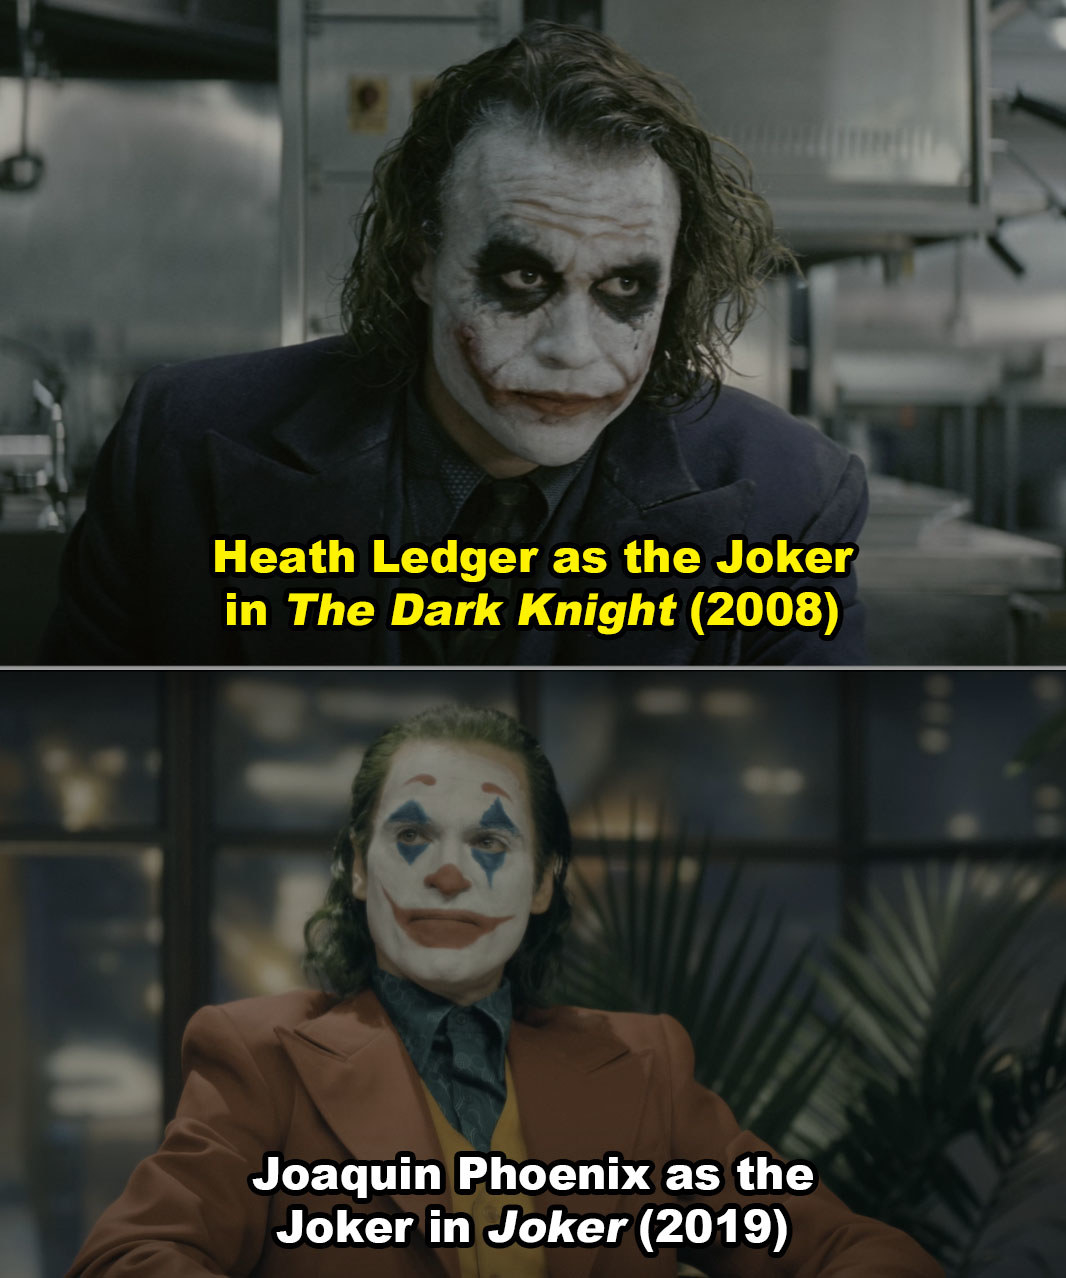 Heath and Joaquin in their Joker clown makeup in each movie